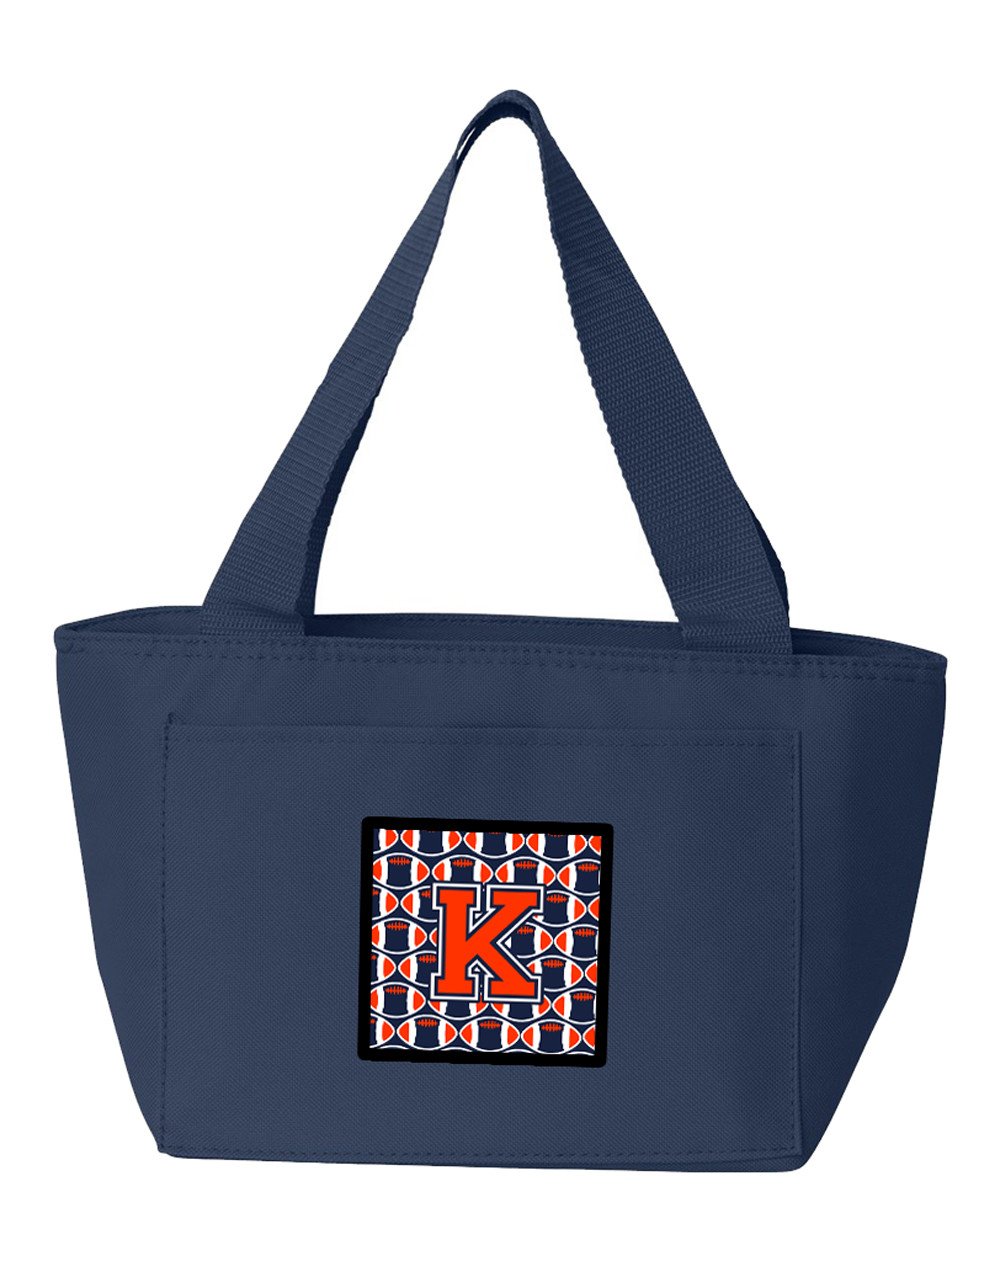 Letter K Football Orange, Blue and white Lunch Bag CJ1066-KNA-8808 by Caroline's Treasures